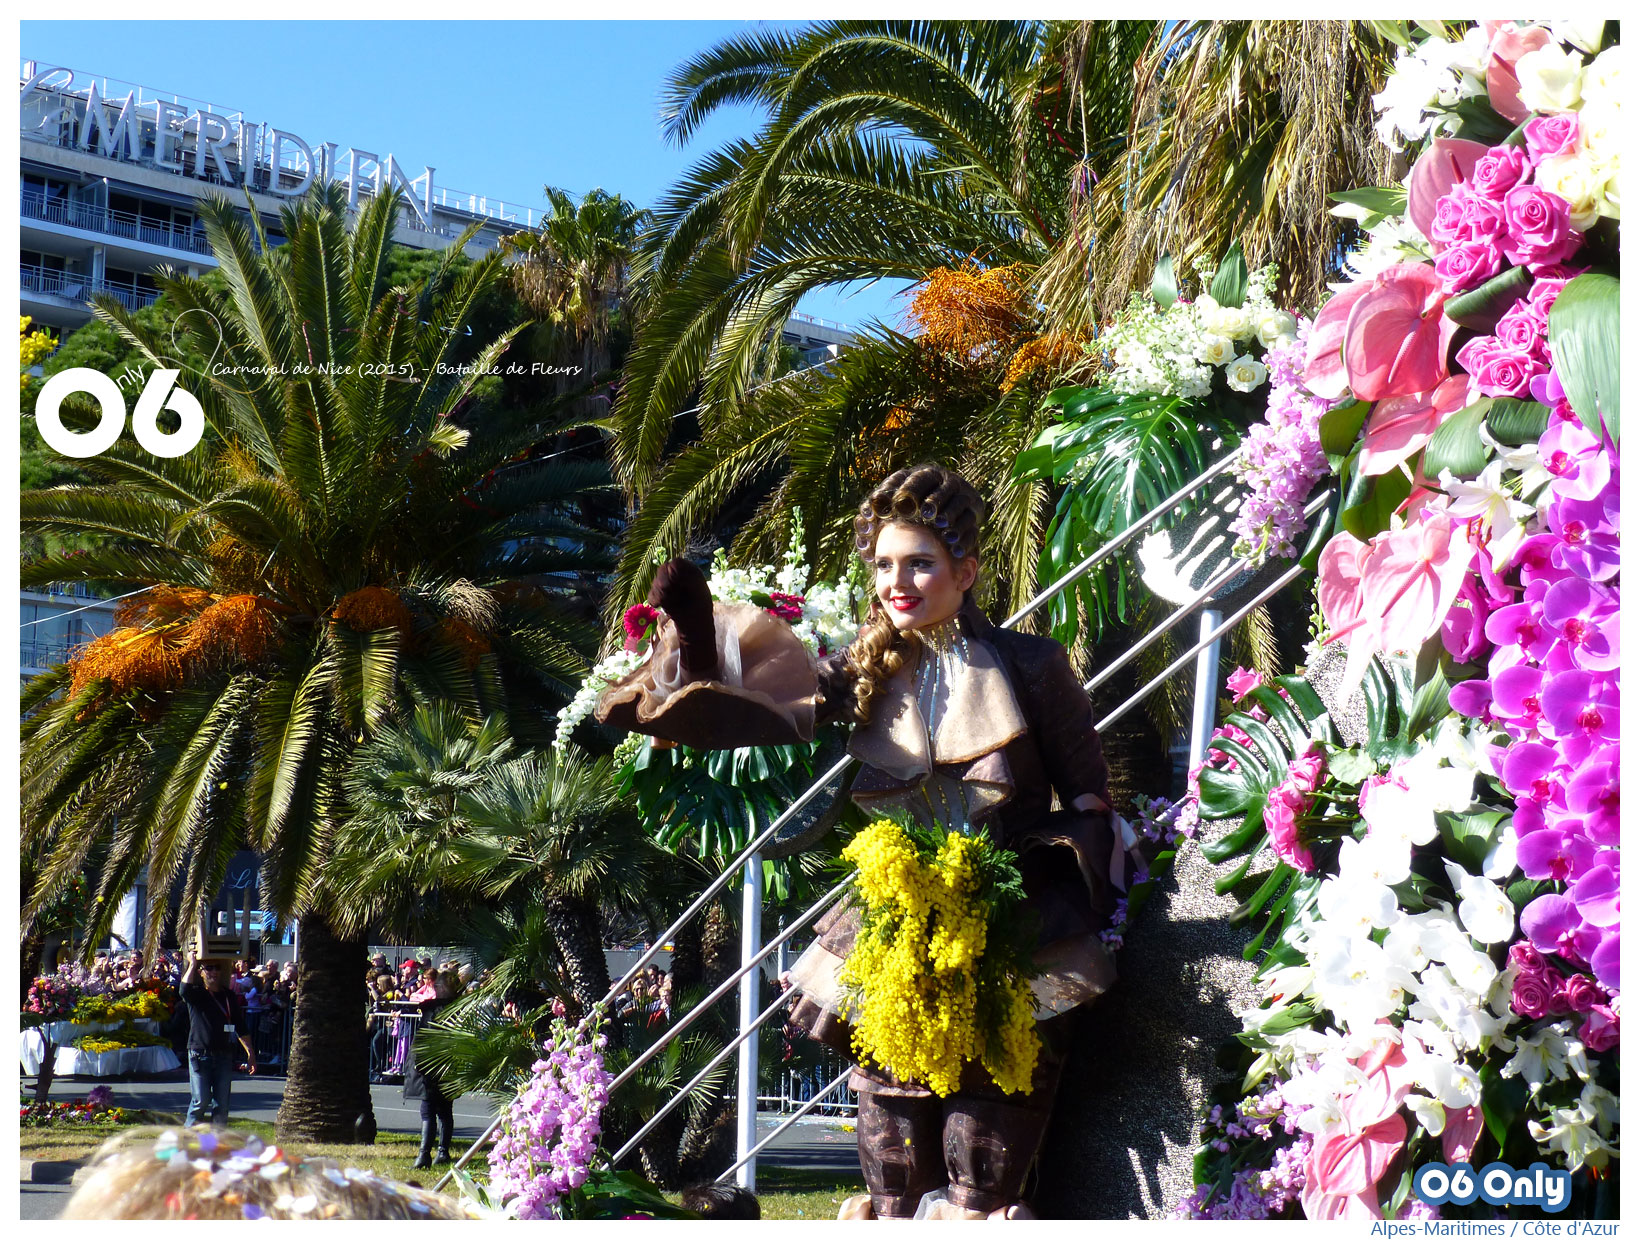 Carnaval de Nice 2015 - Roi de la Musique. Photo n° 39